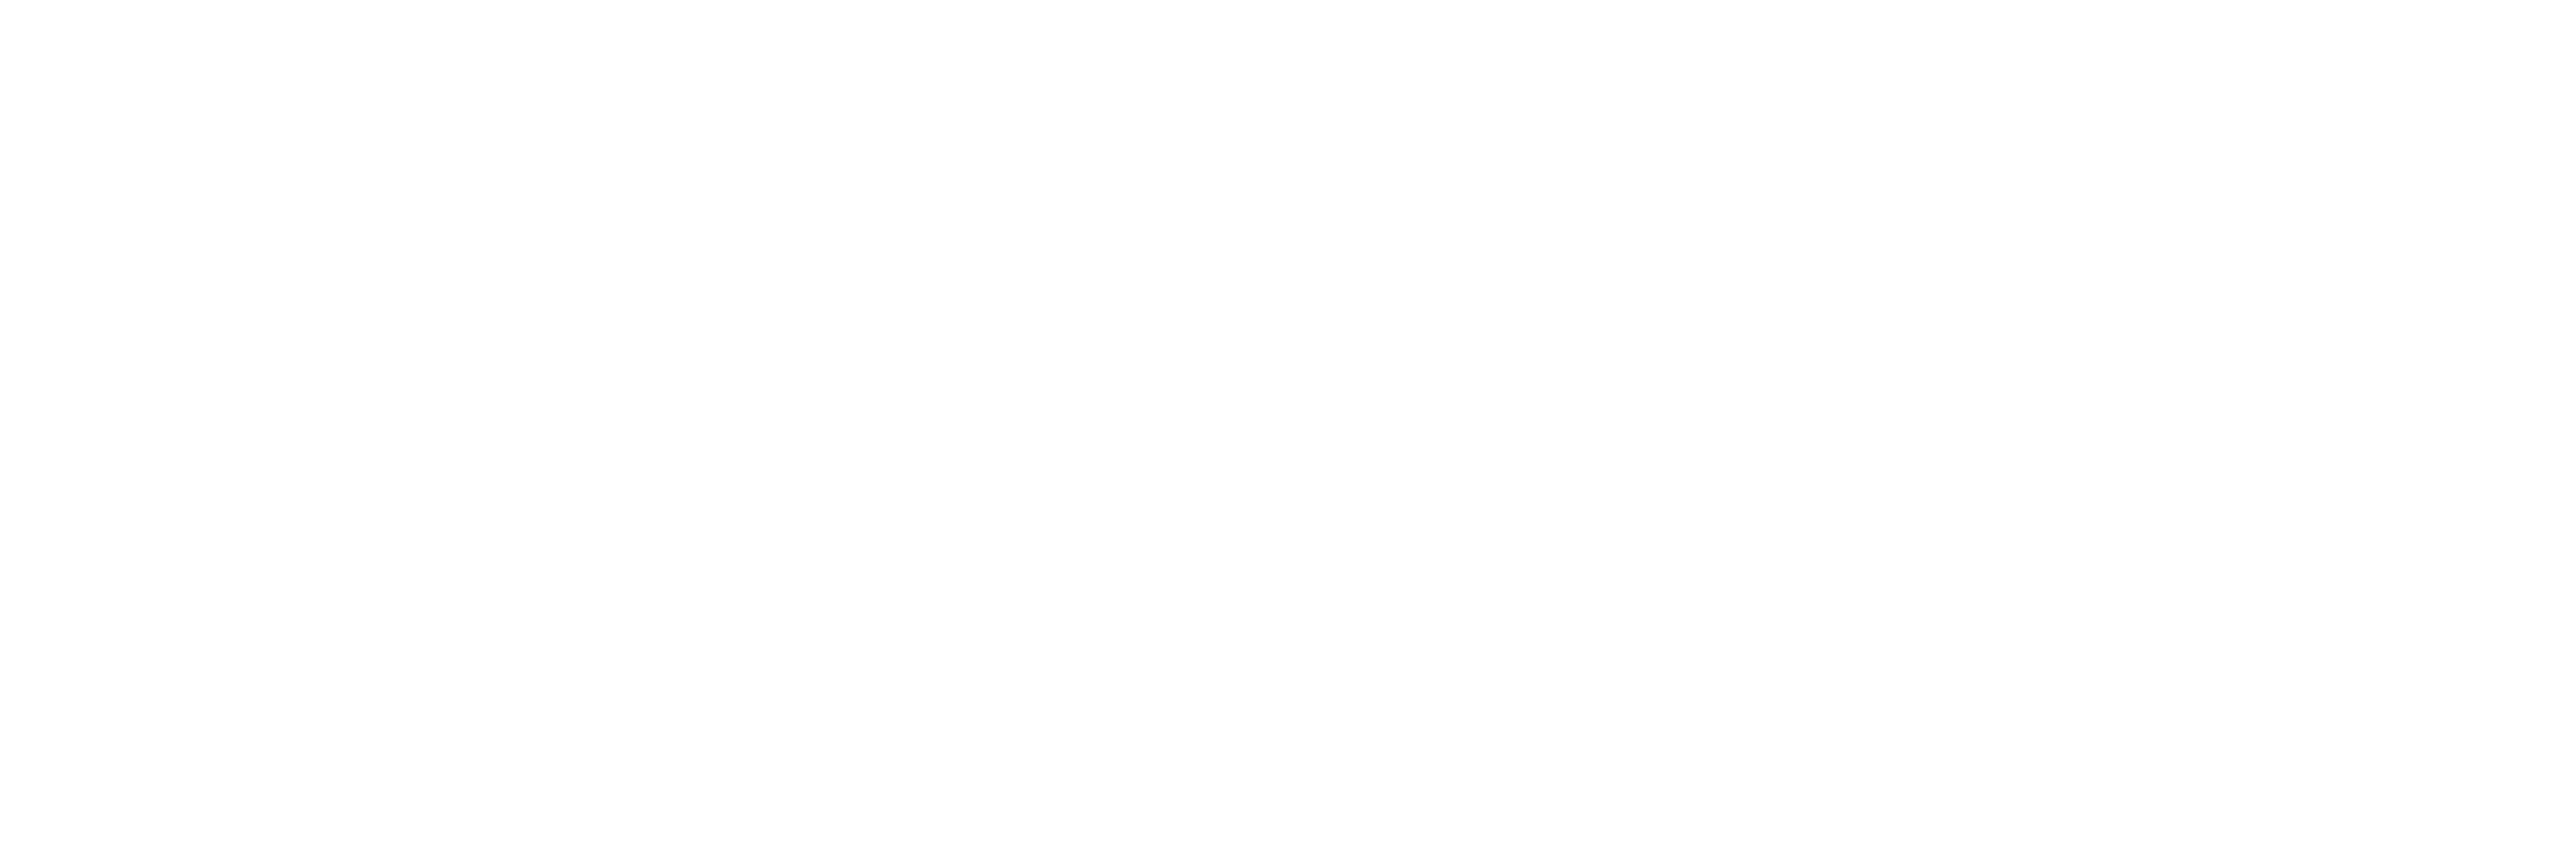 Prescott Radiologists